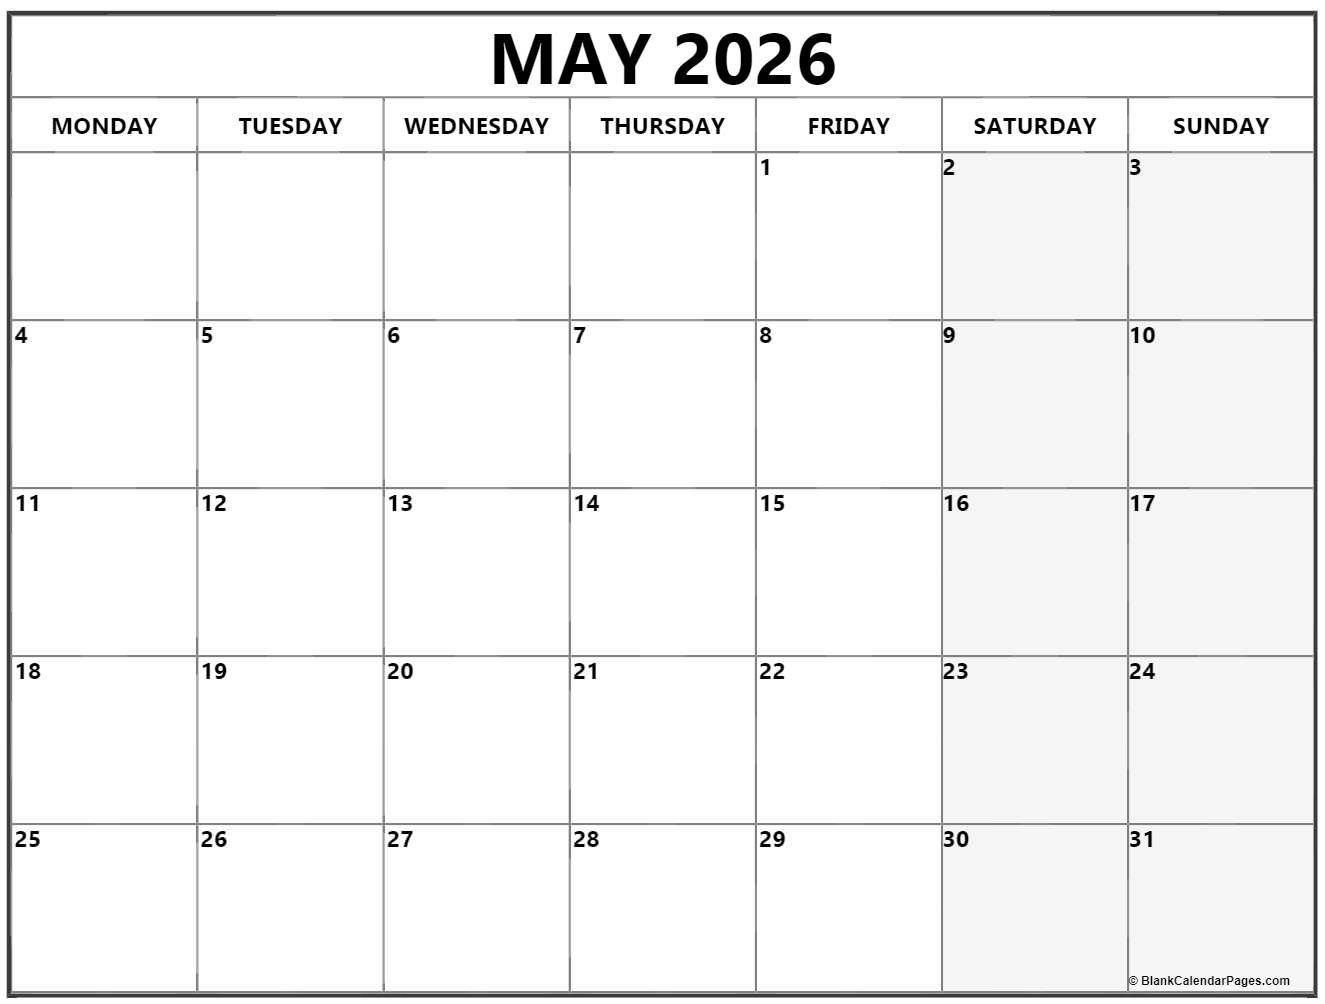 May 2026 Monday calendar. Monday to Sunday